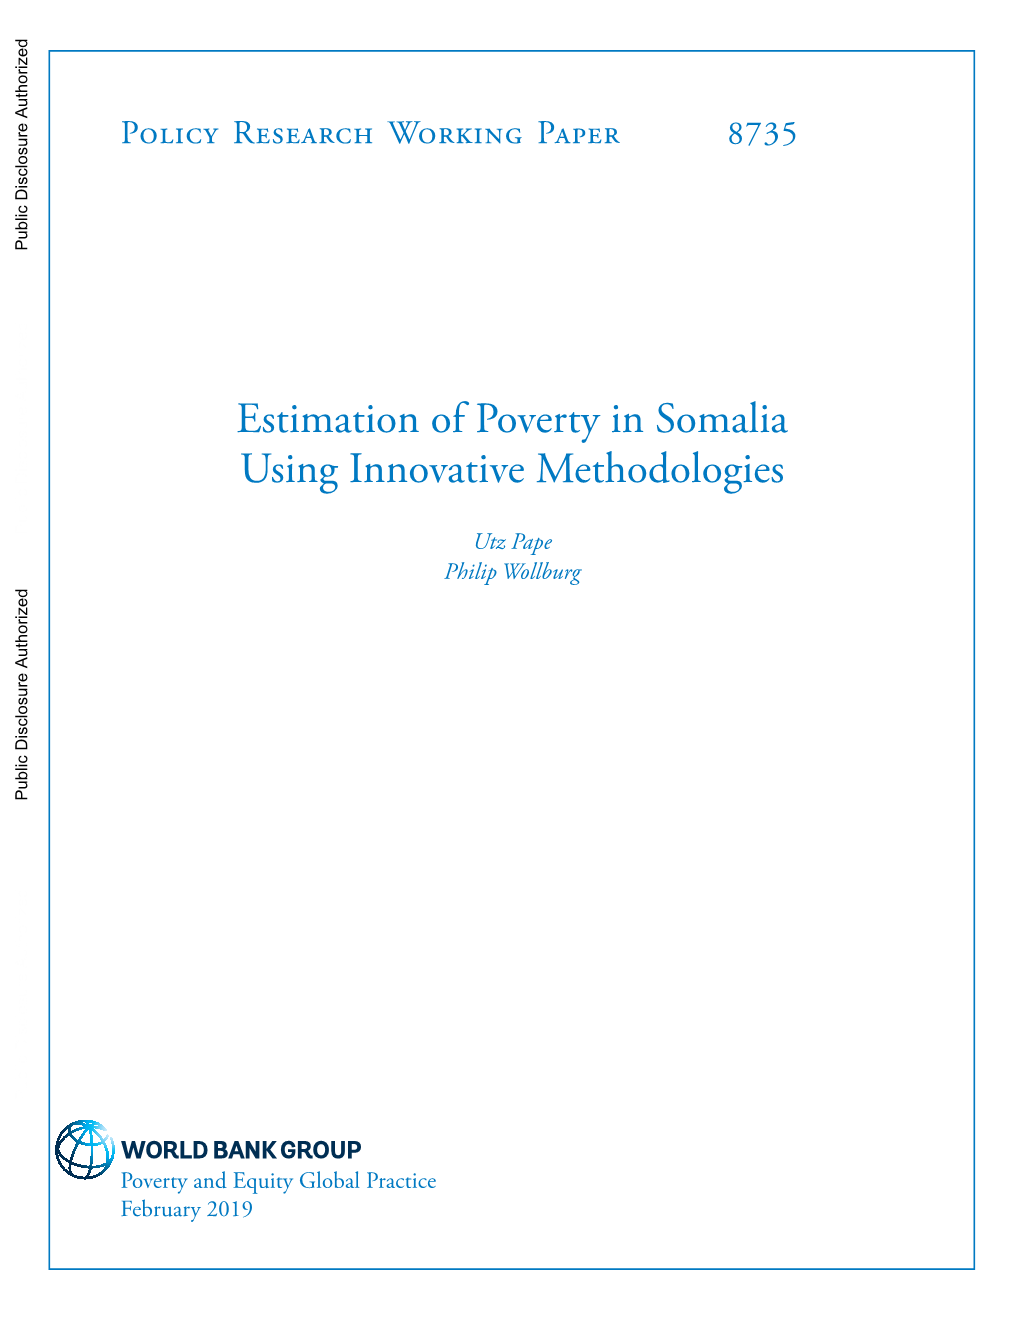 Estimation of Poverty in Somalia Using Innovative Methodologies